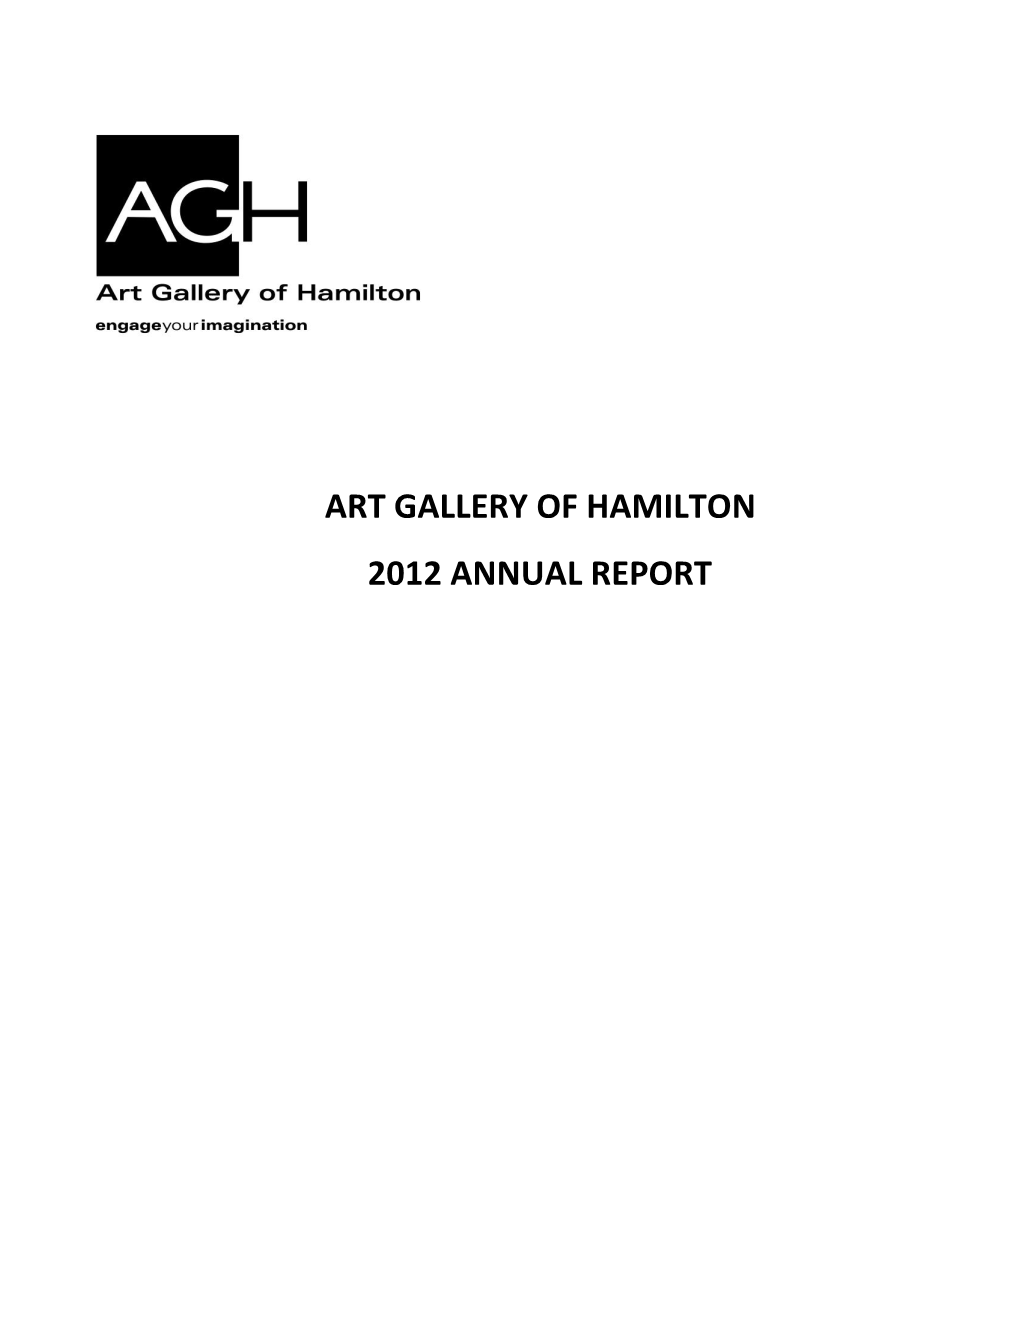 Art Gallery of Hamilton 2012 Annual Report